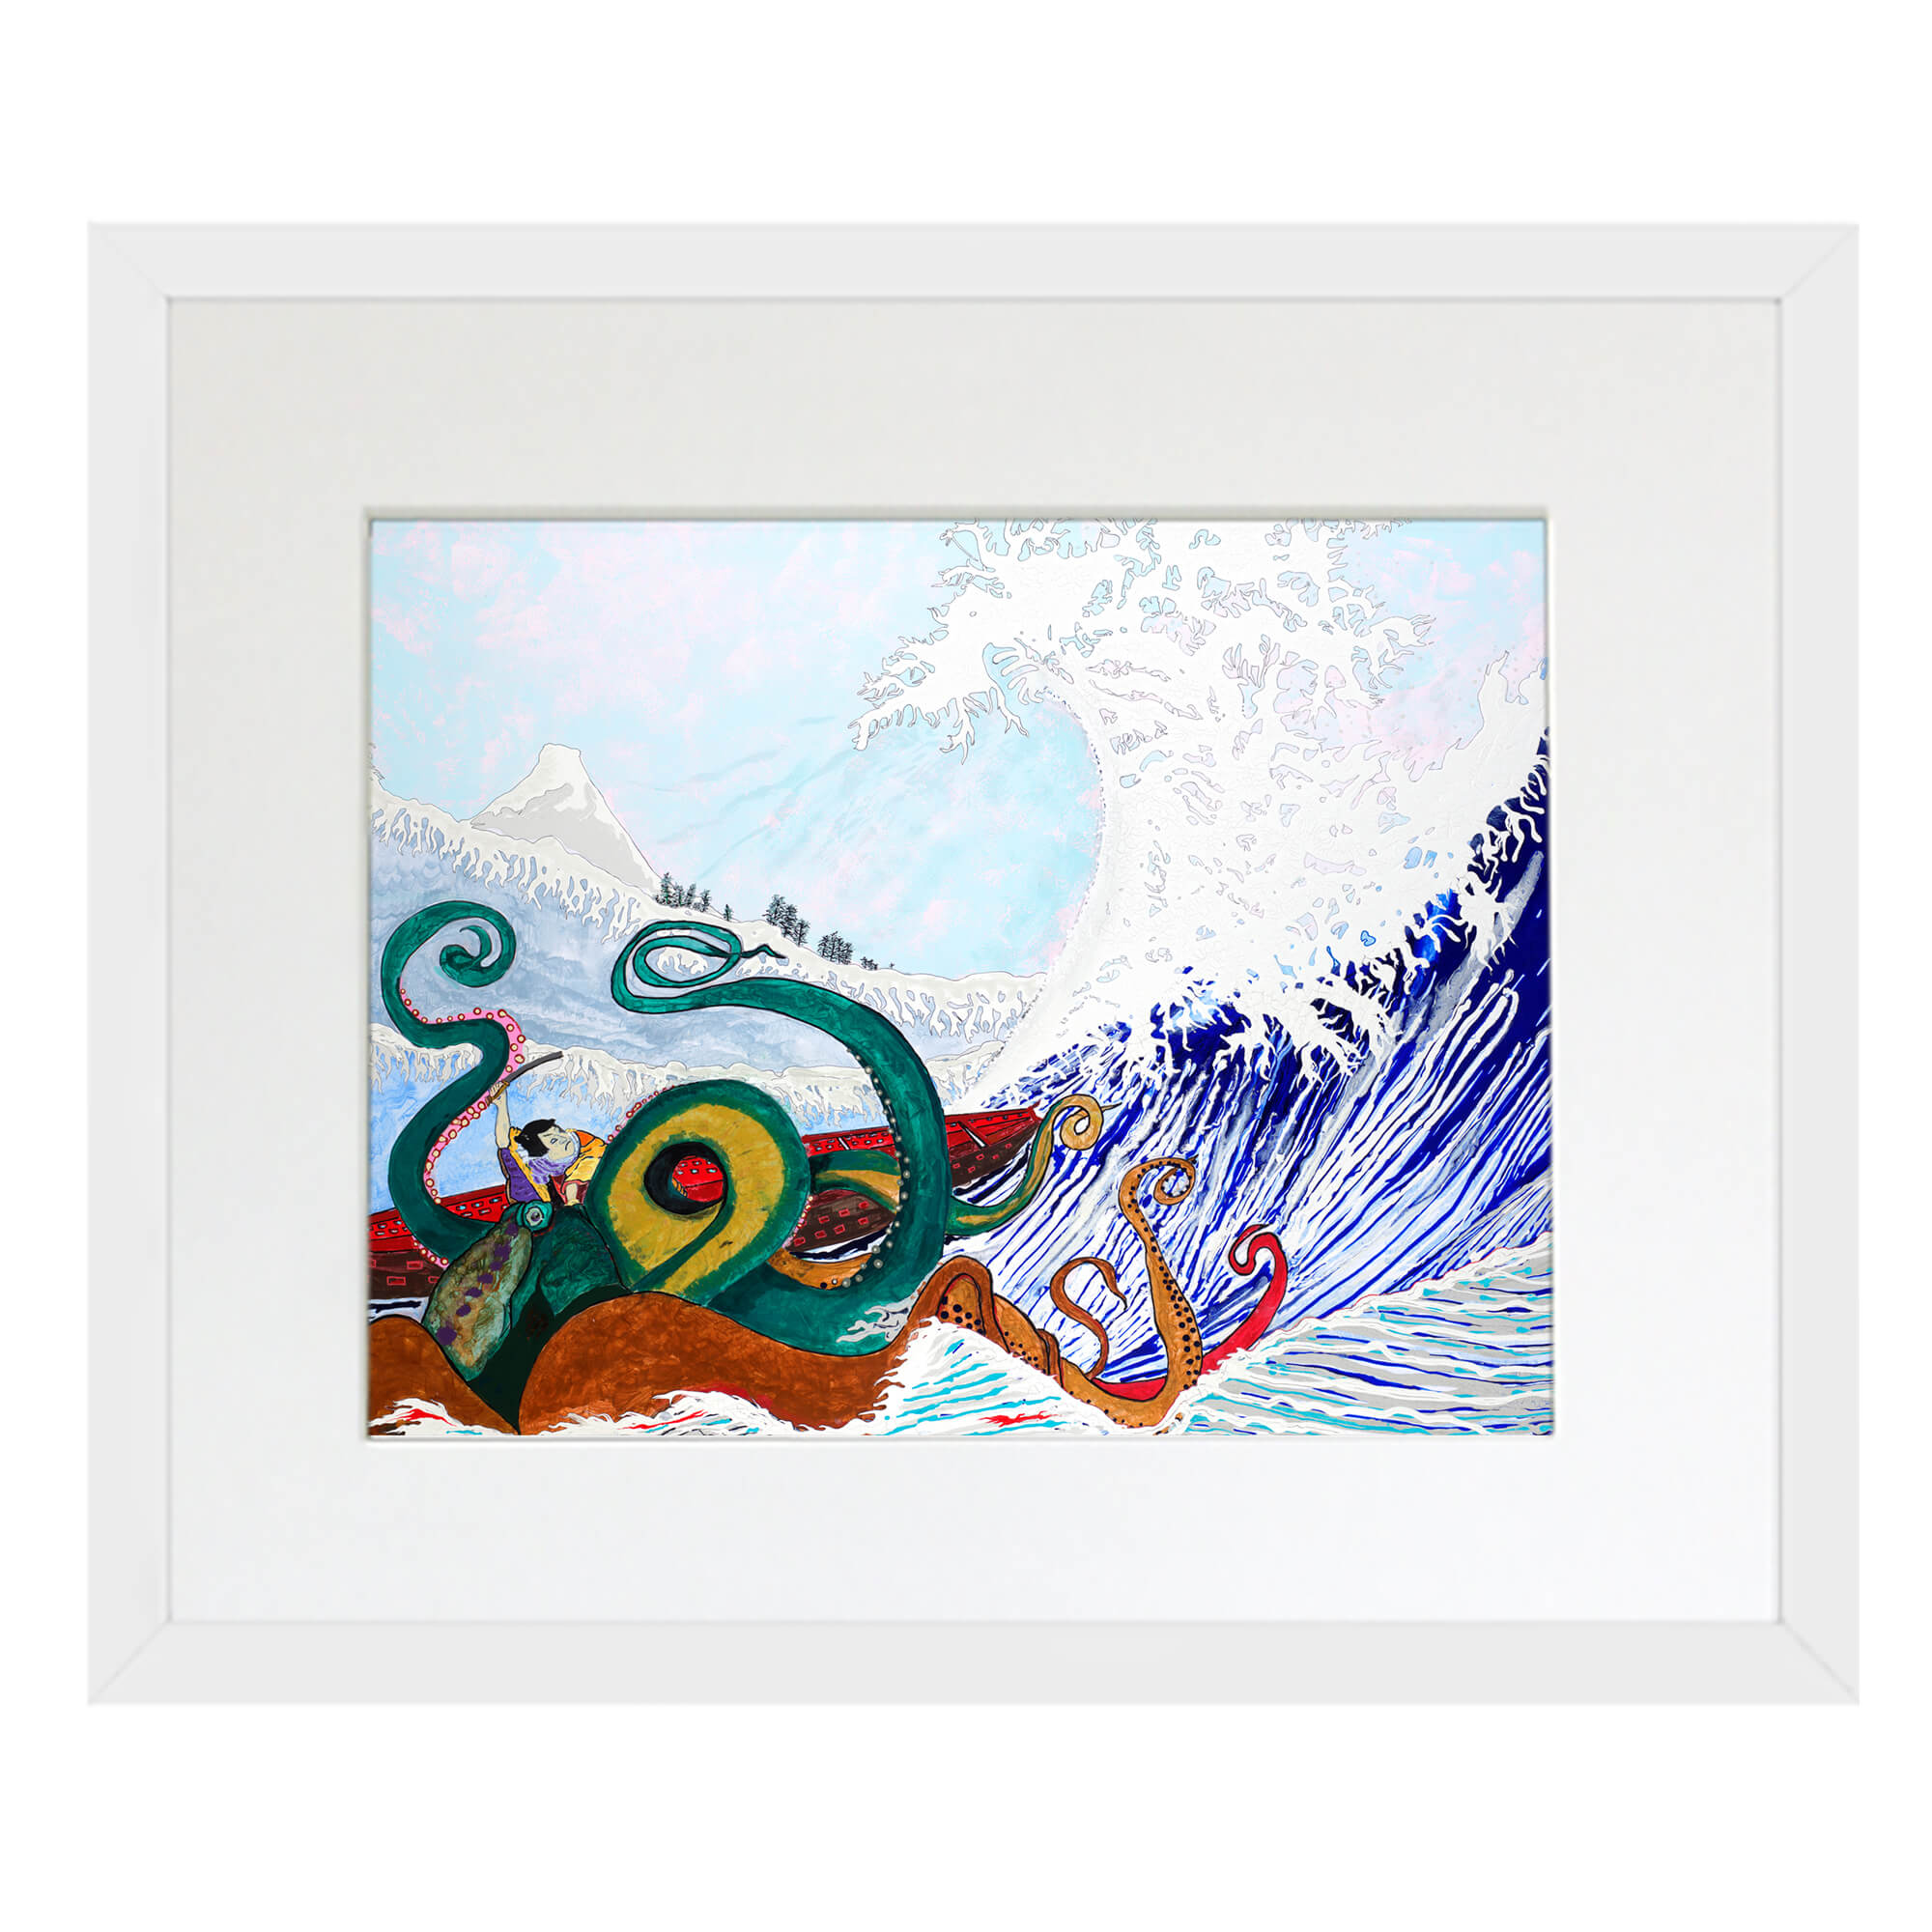 Matted art print with white frame showcasing a big blue wave by hawaii artist robert hazzard